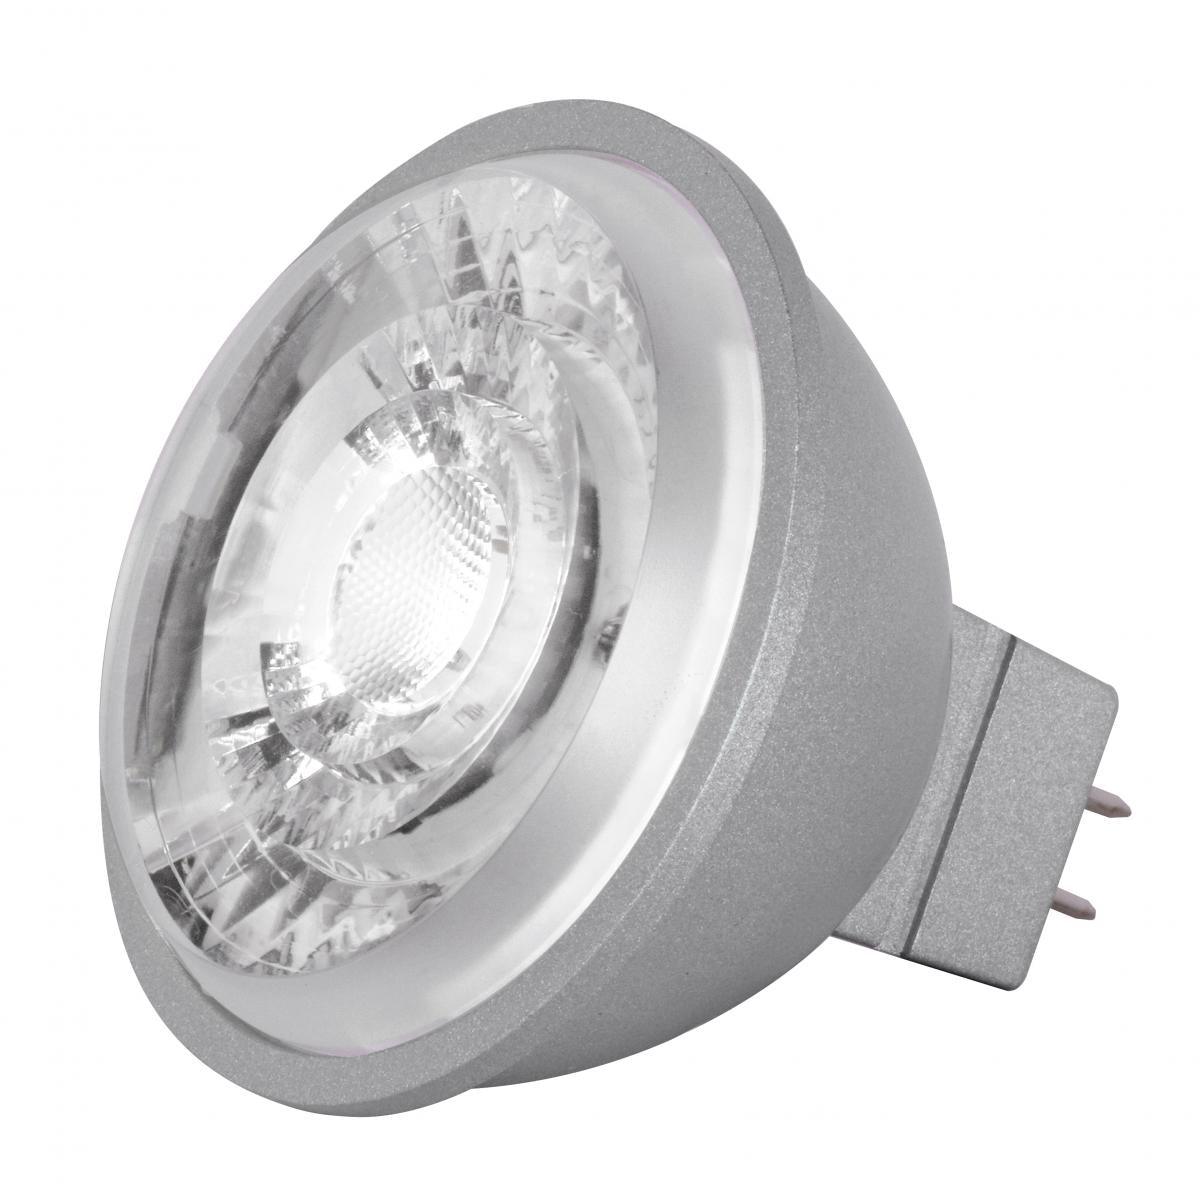 MR16 Reflector LED bulb, 8 watt, 490 Lumens, 4000K, GU5.3 Base, 15 Deg. Spot